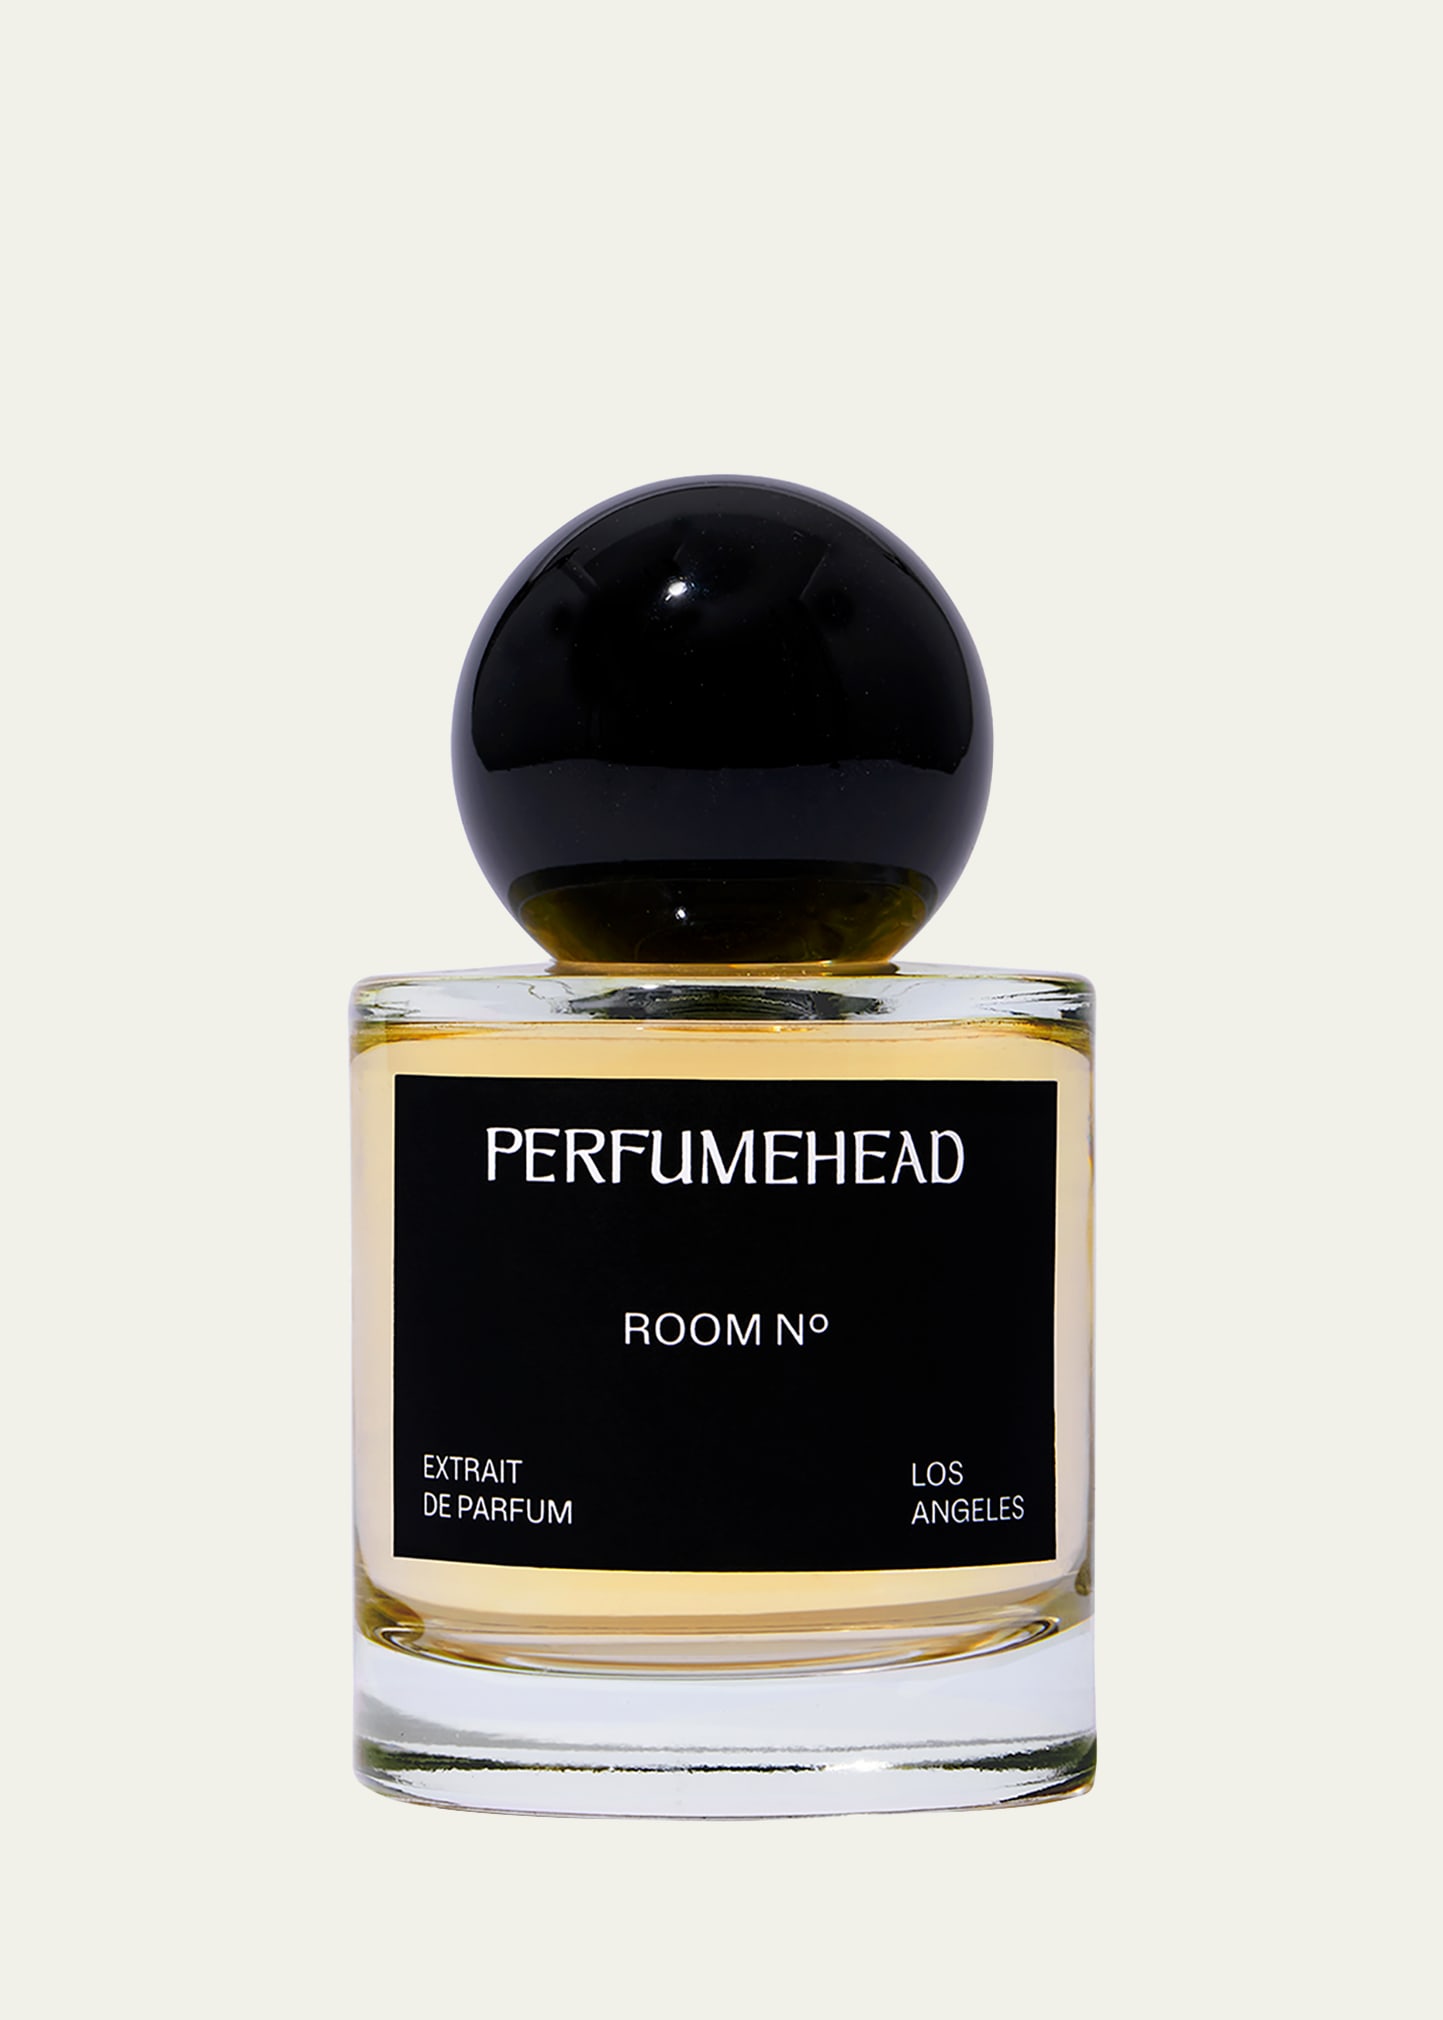 Perfumehead Room No. Extrait De Parfum, 1.7 Oz.